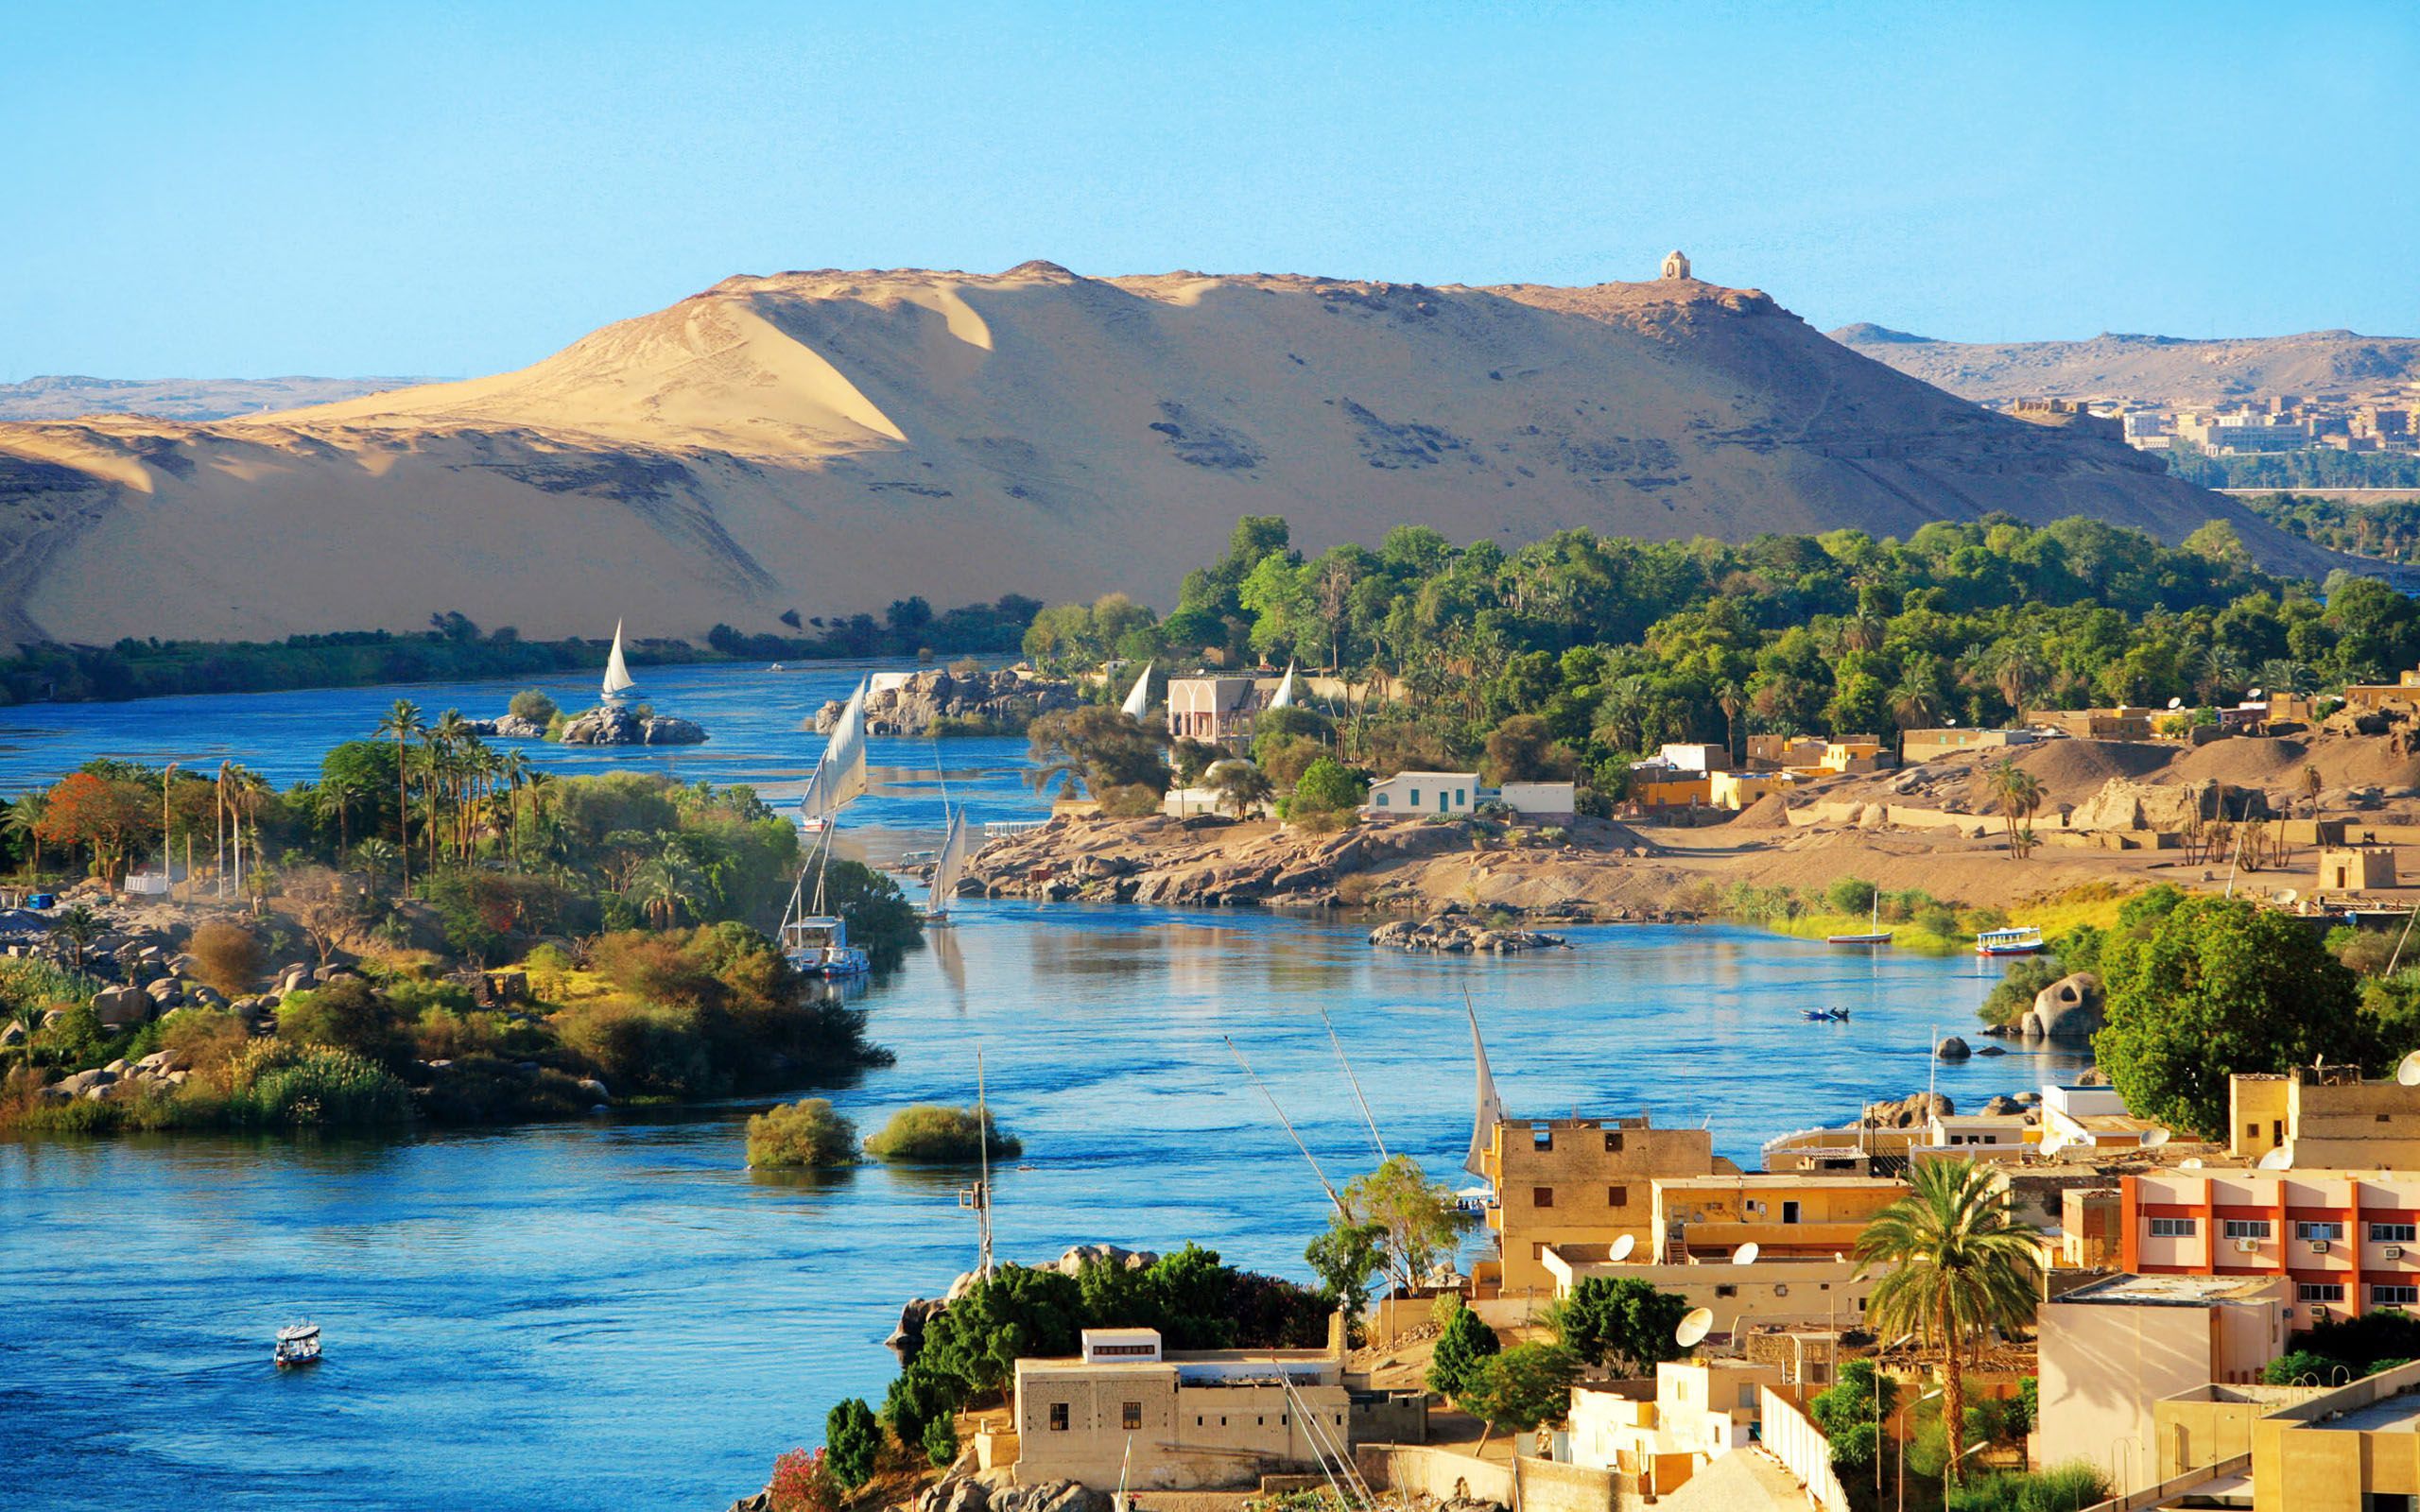 Egypt Cairo 5 Days Tour - Luxor, Aswan, Pyramids, Sphinx 